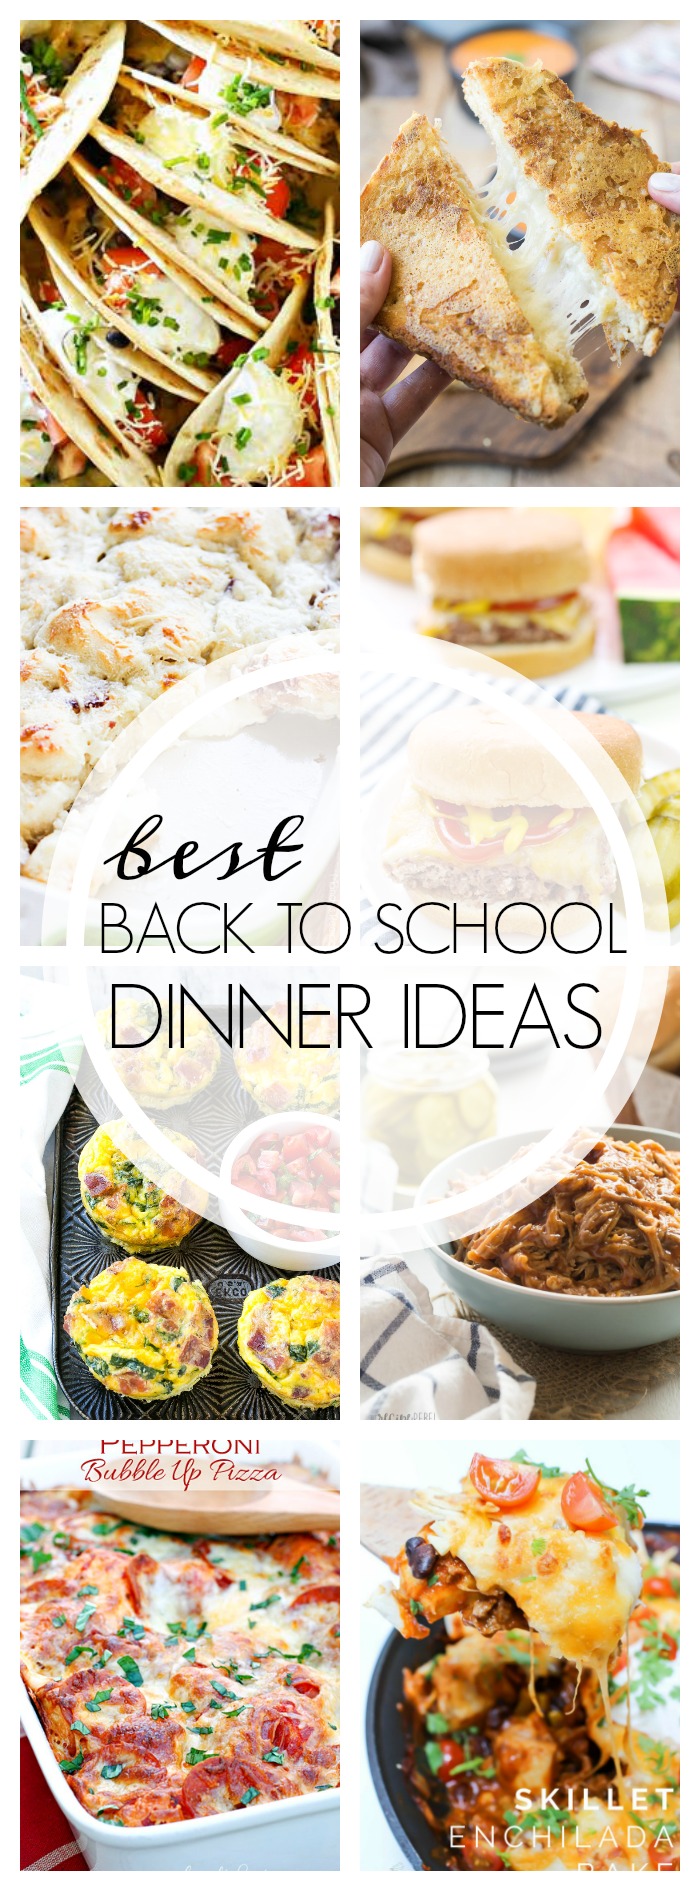 The Best Back to School Dinner Ideas